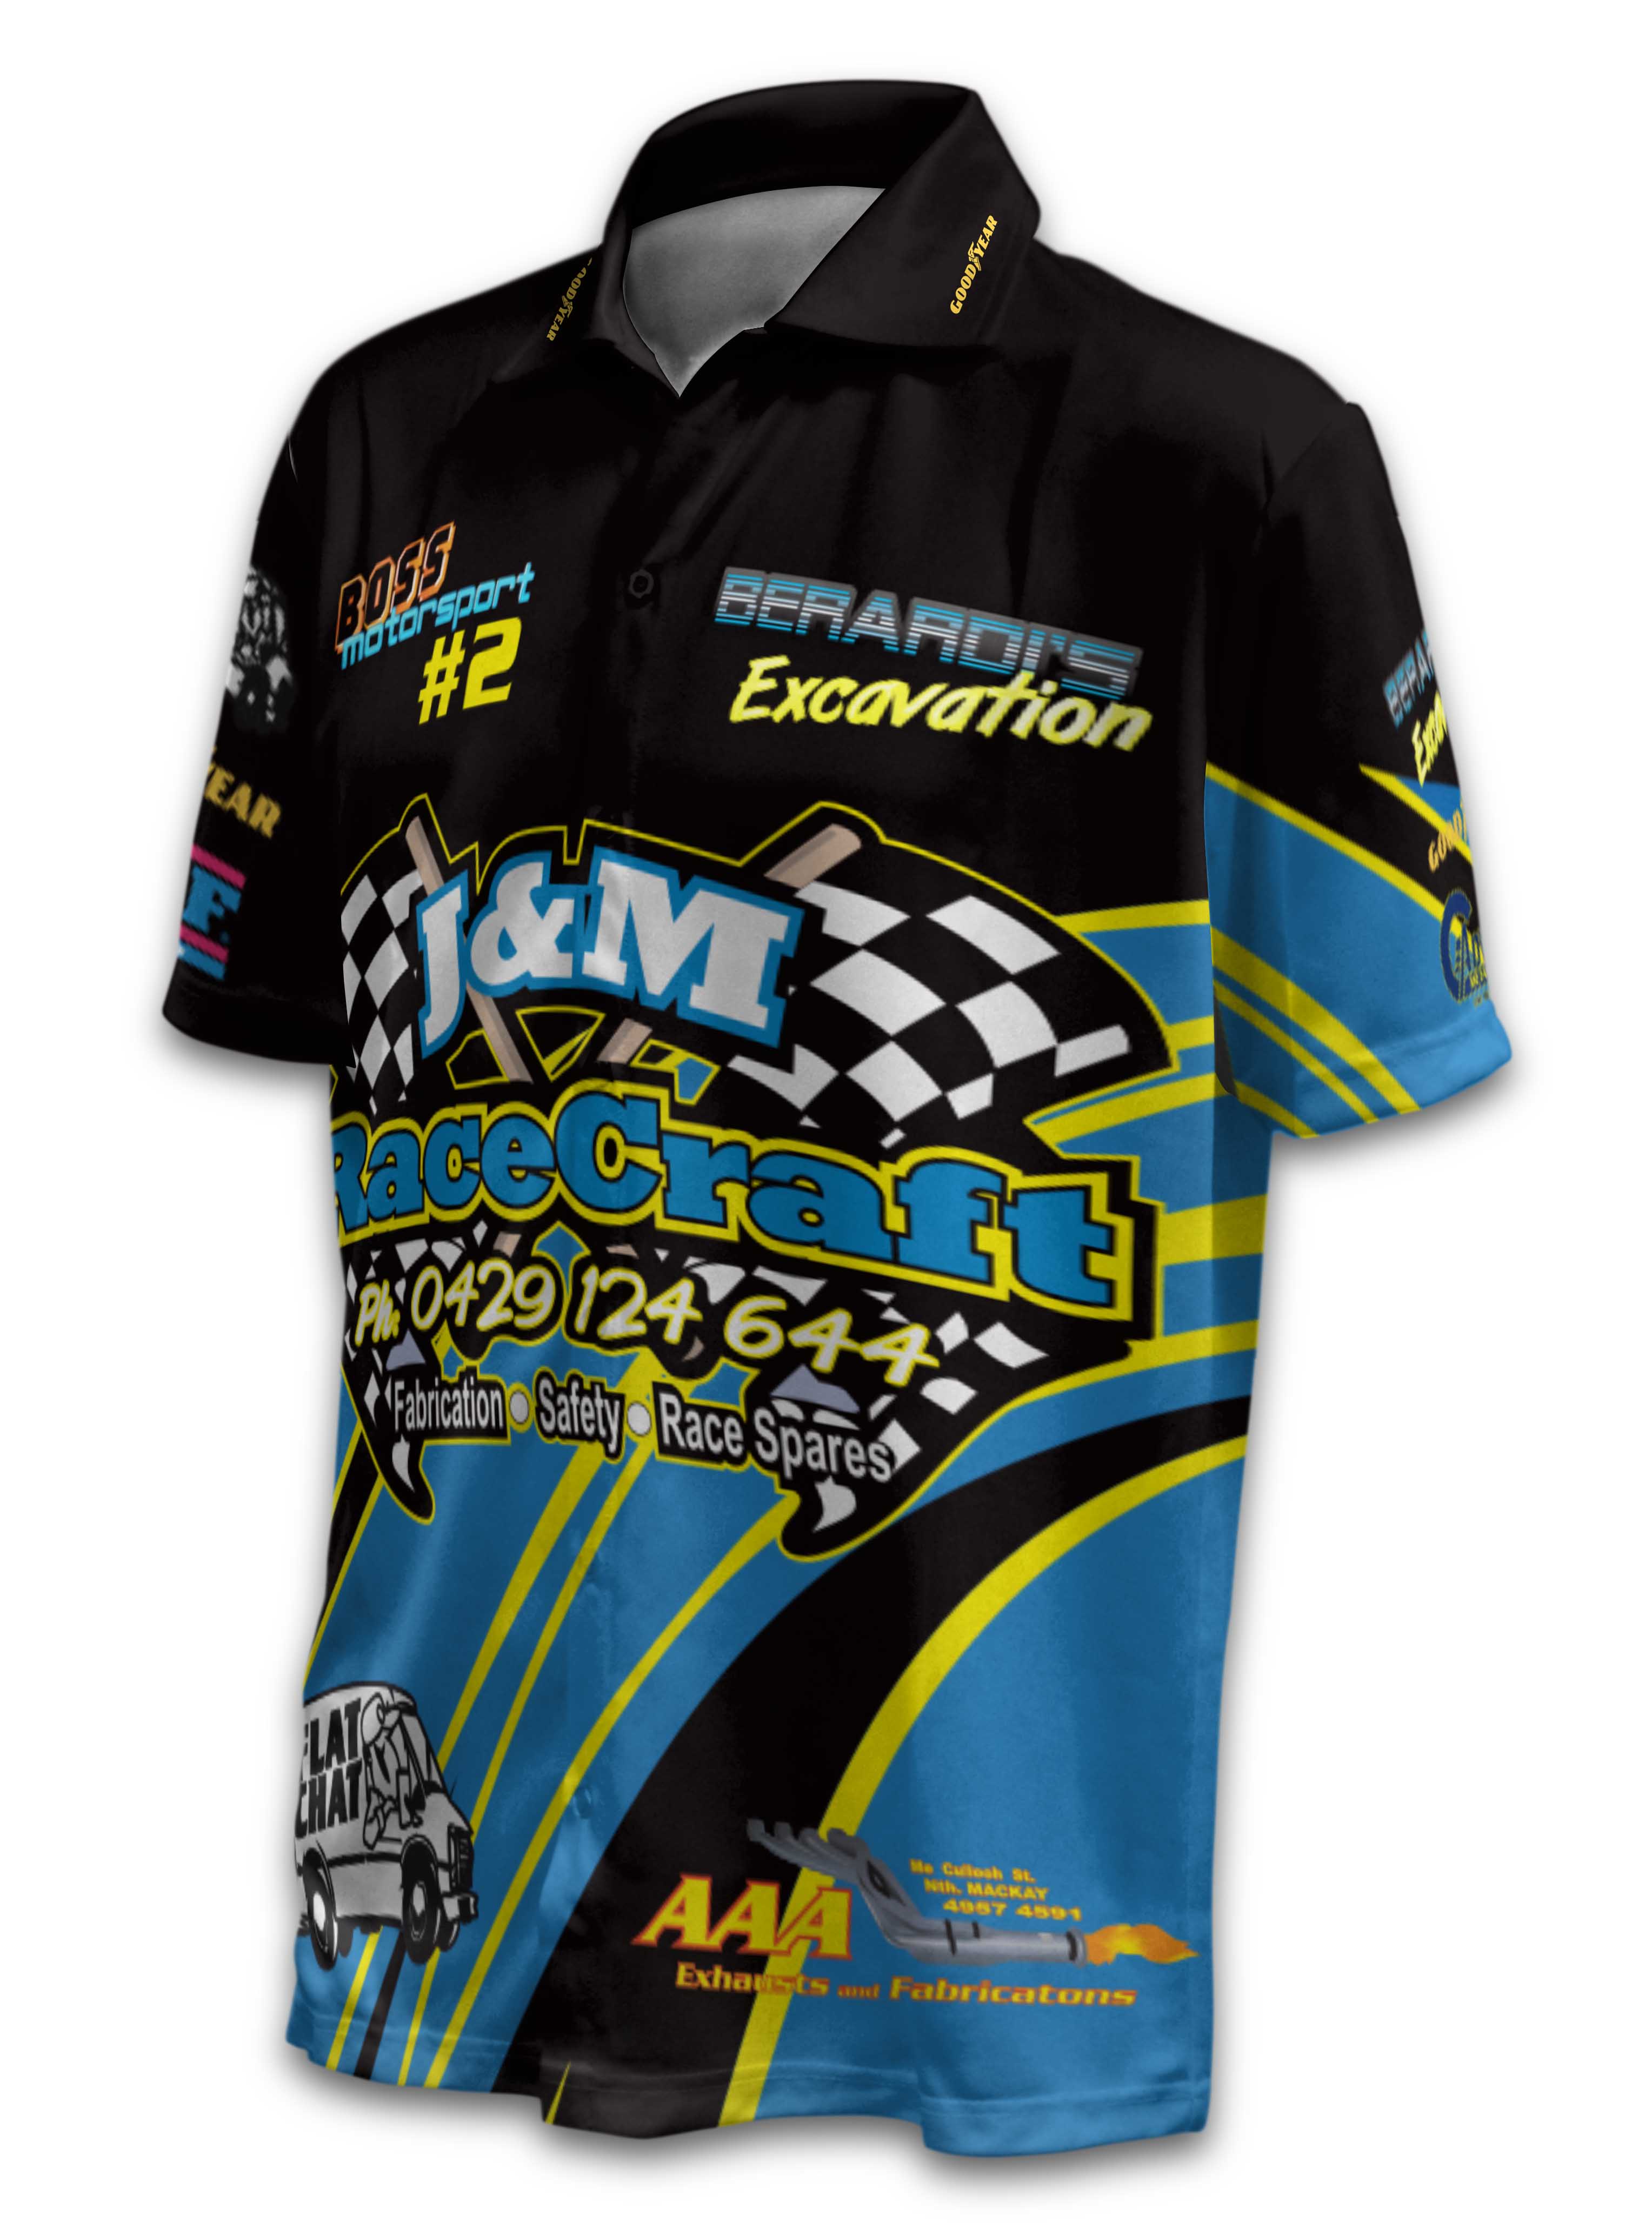 Racing Uniform Team Wear Shirt - Buy custom team shirts, race team